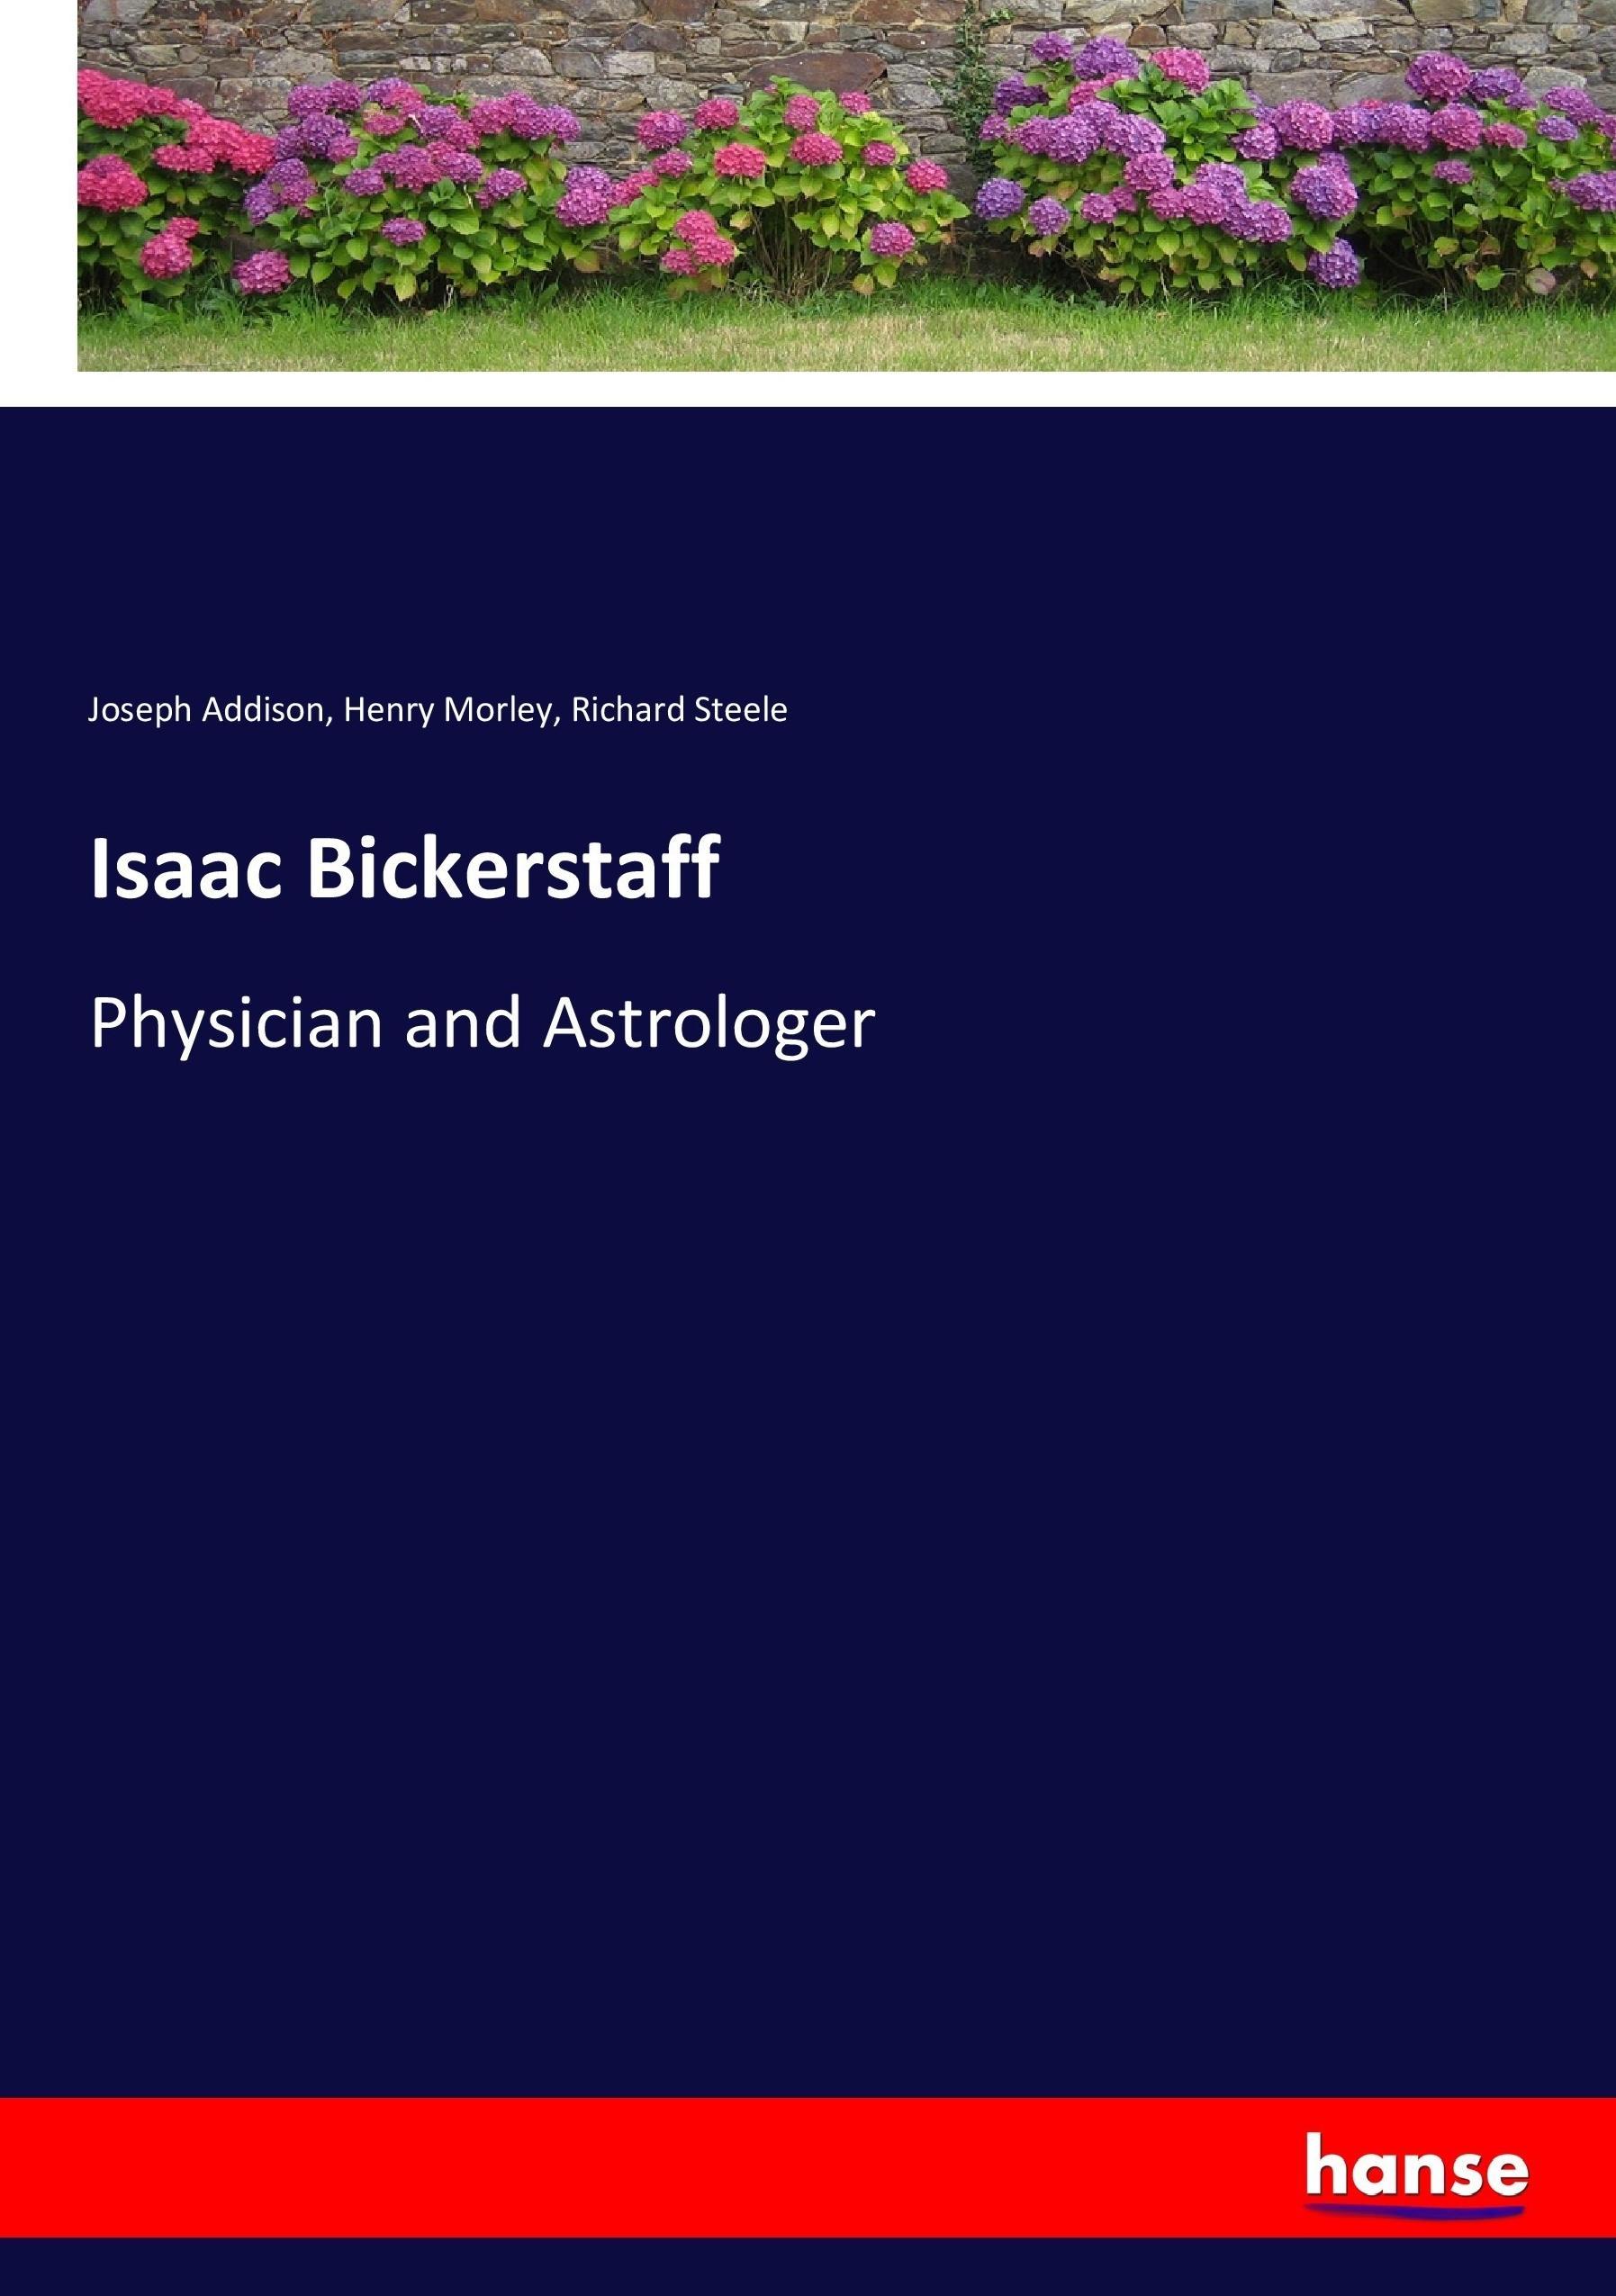 Isaac Bickerstaff / Physician and Astrologer / Joseph Addison (u. a.) / Taschenbuch / Paperback / 204 S. / Englisch / 2017 / hansebooks / EAN 9783337058463 - Addison, Joseph